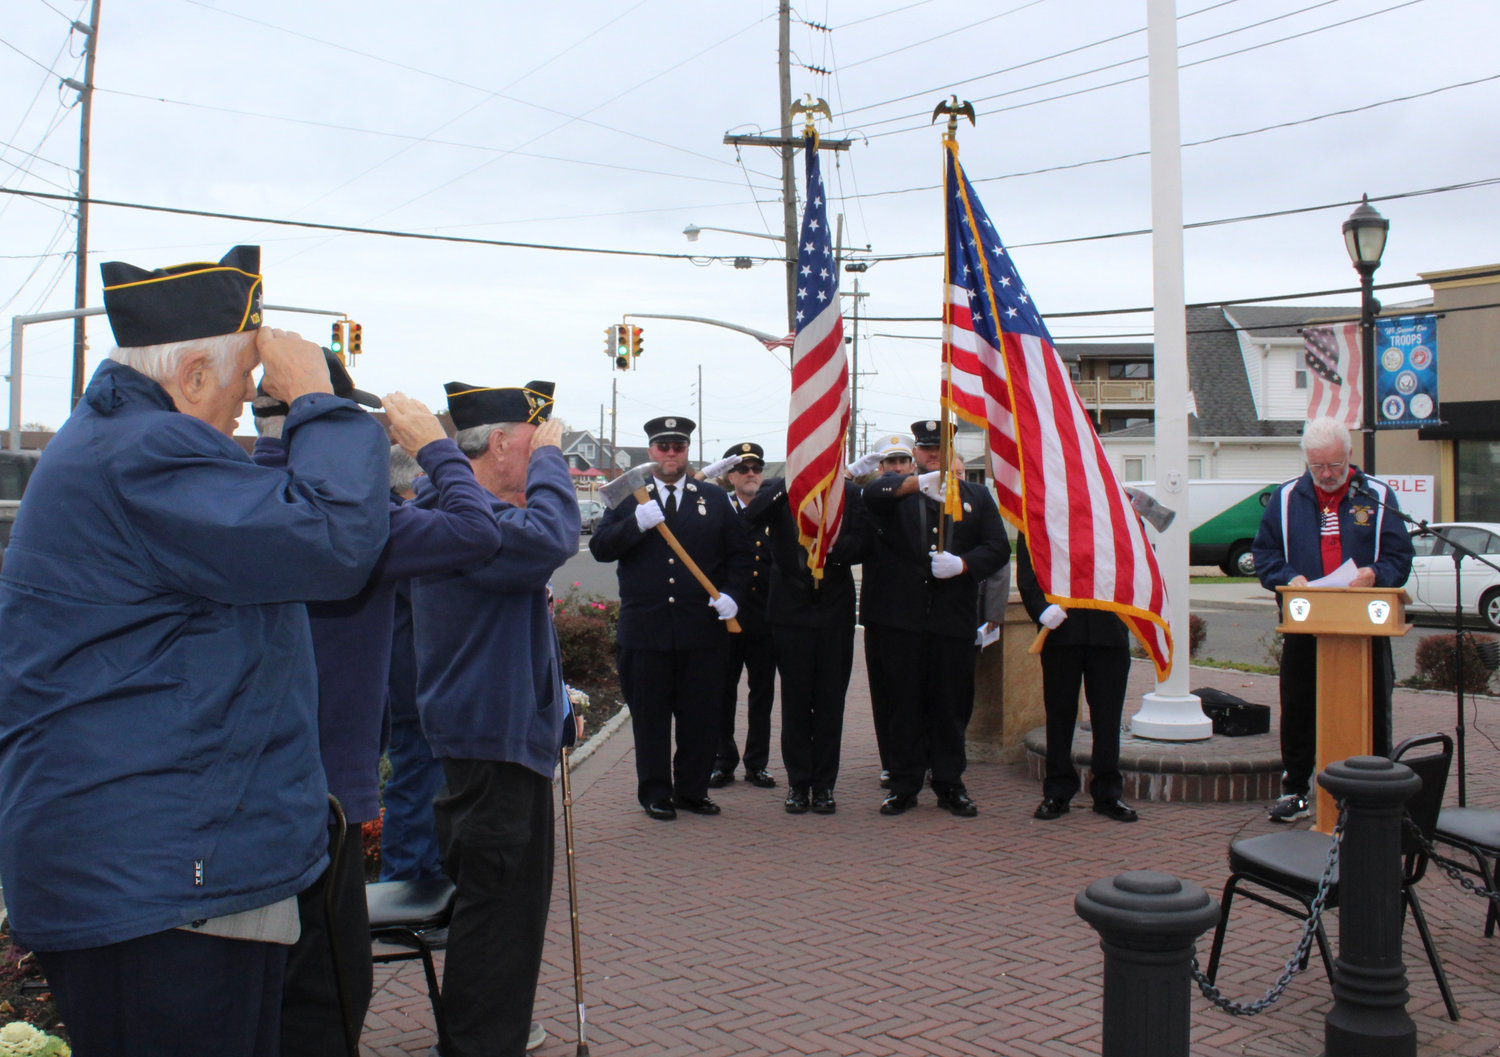 Island Park veterans saluted the flag as Bob Wilson spoke.